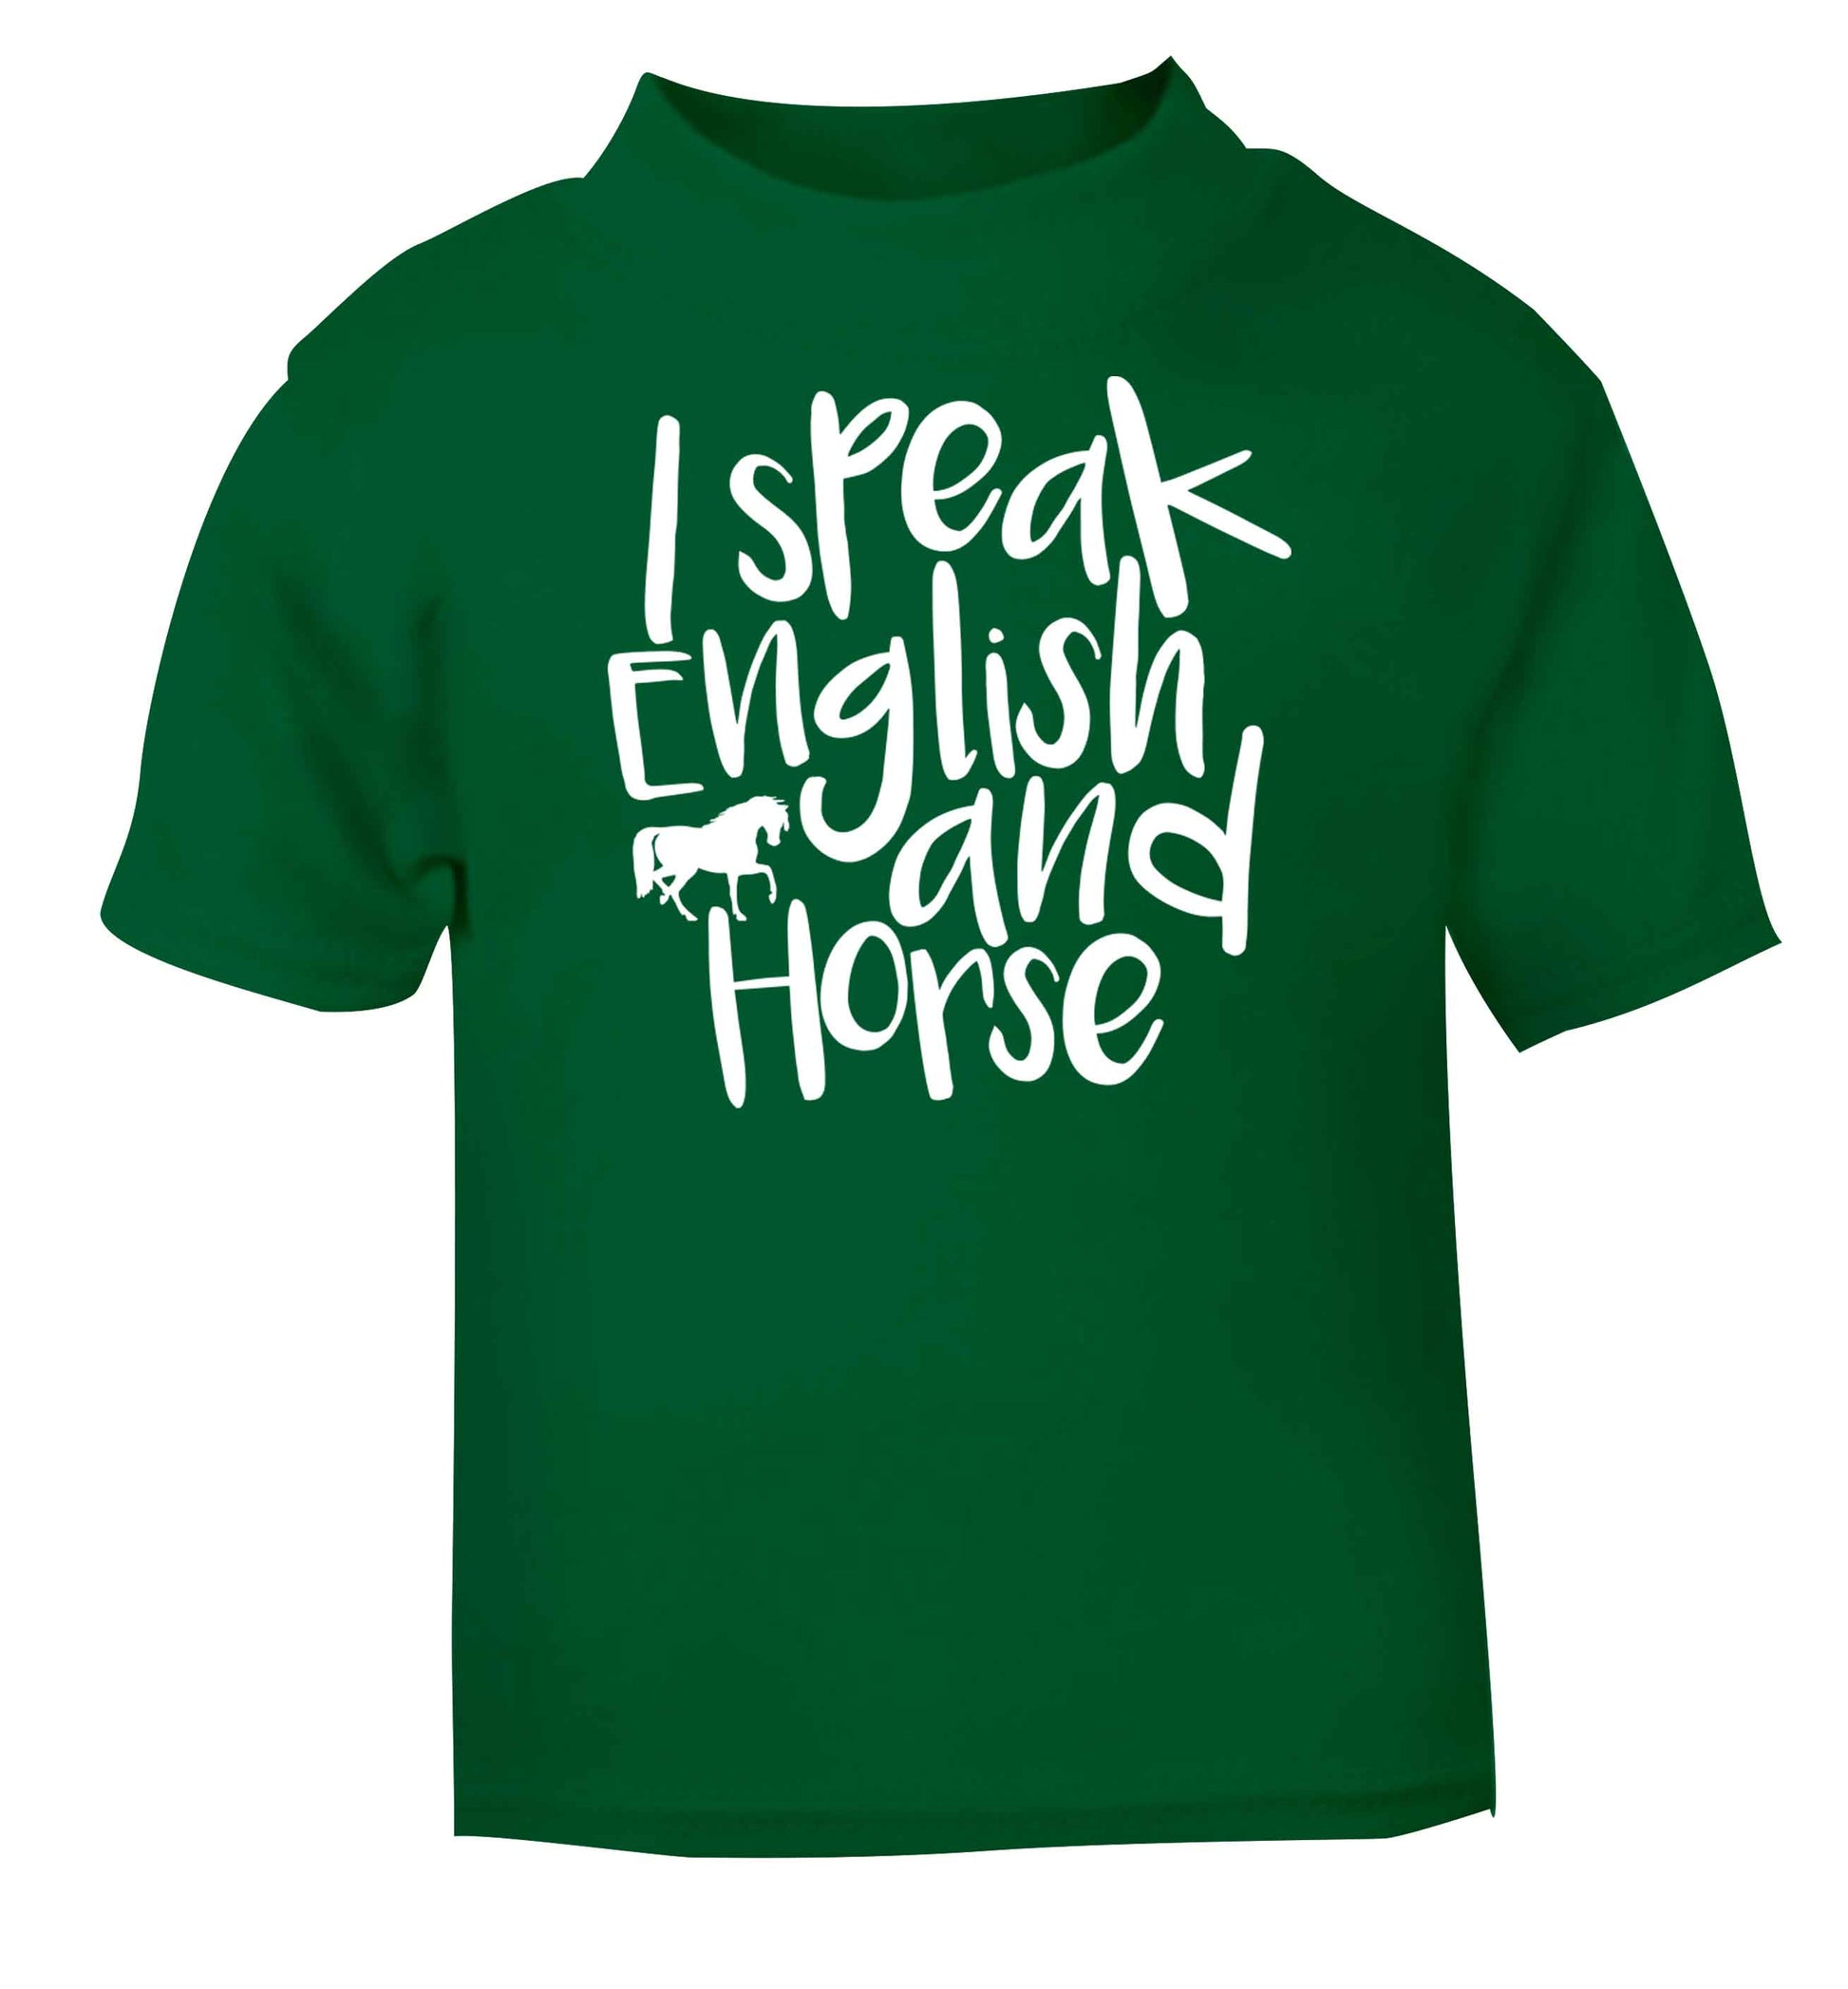 I speak English and horse green baby toddler Tshirt 2 Years